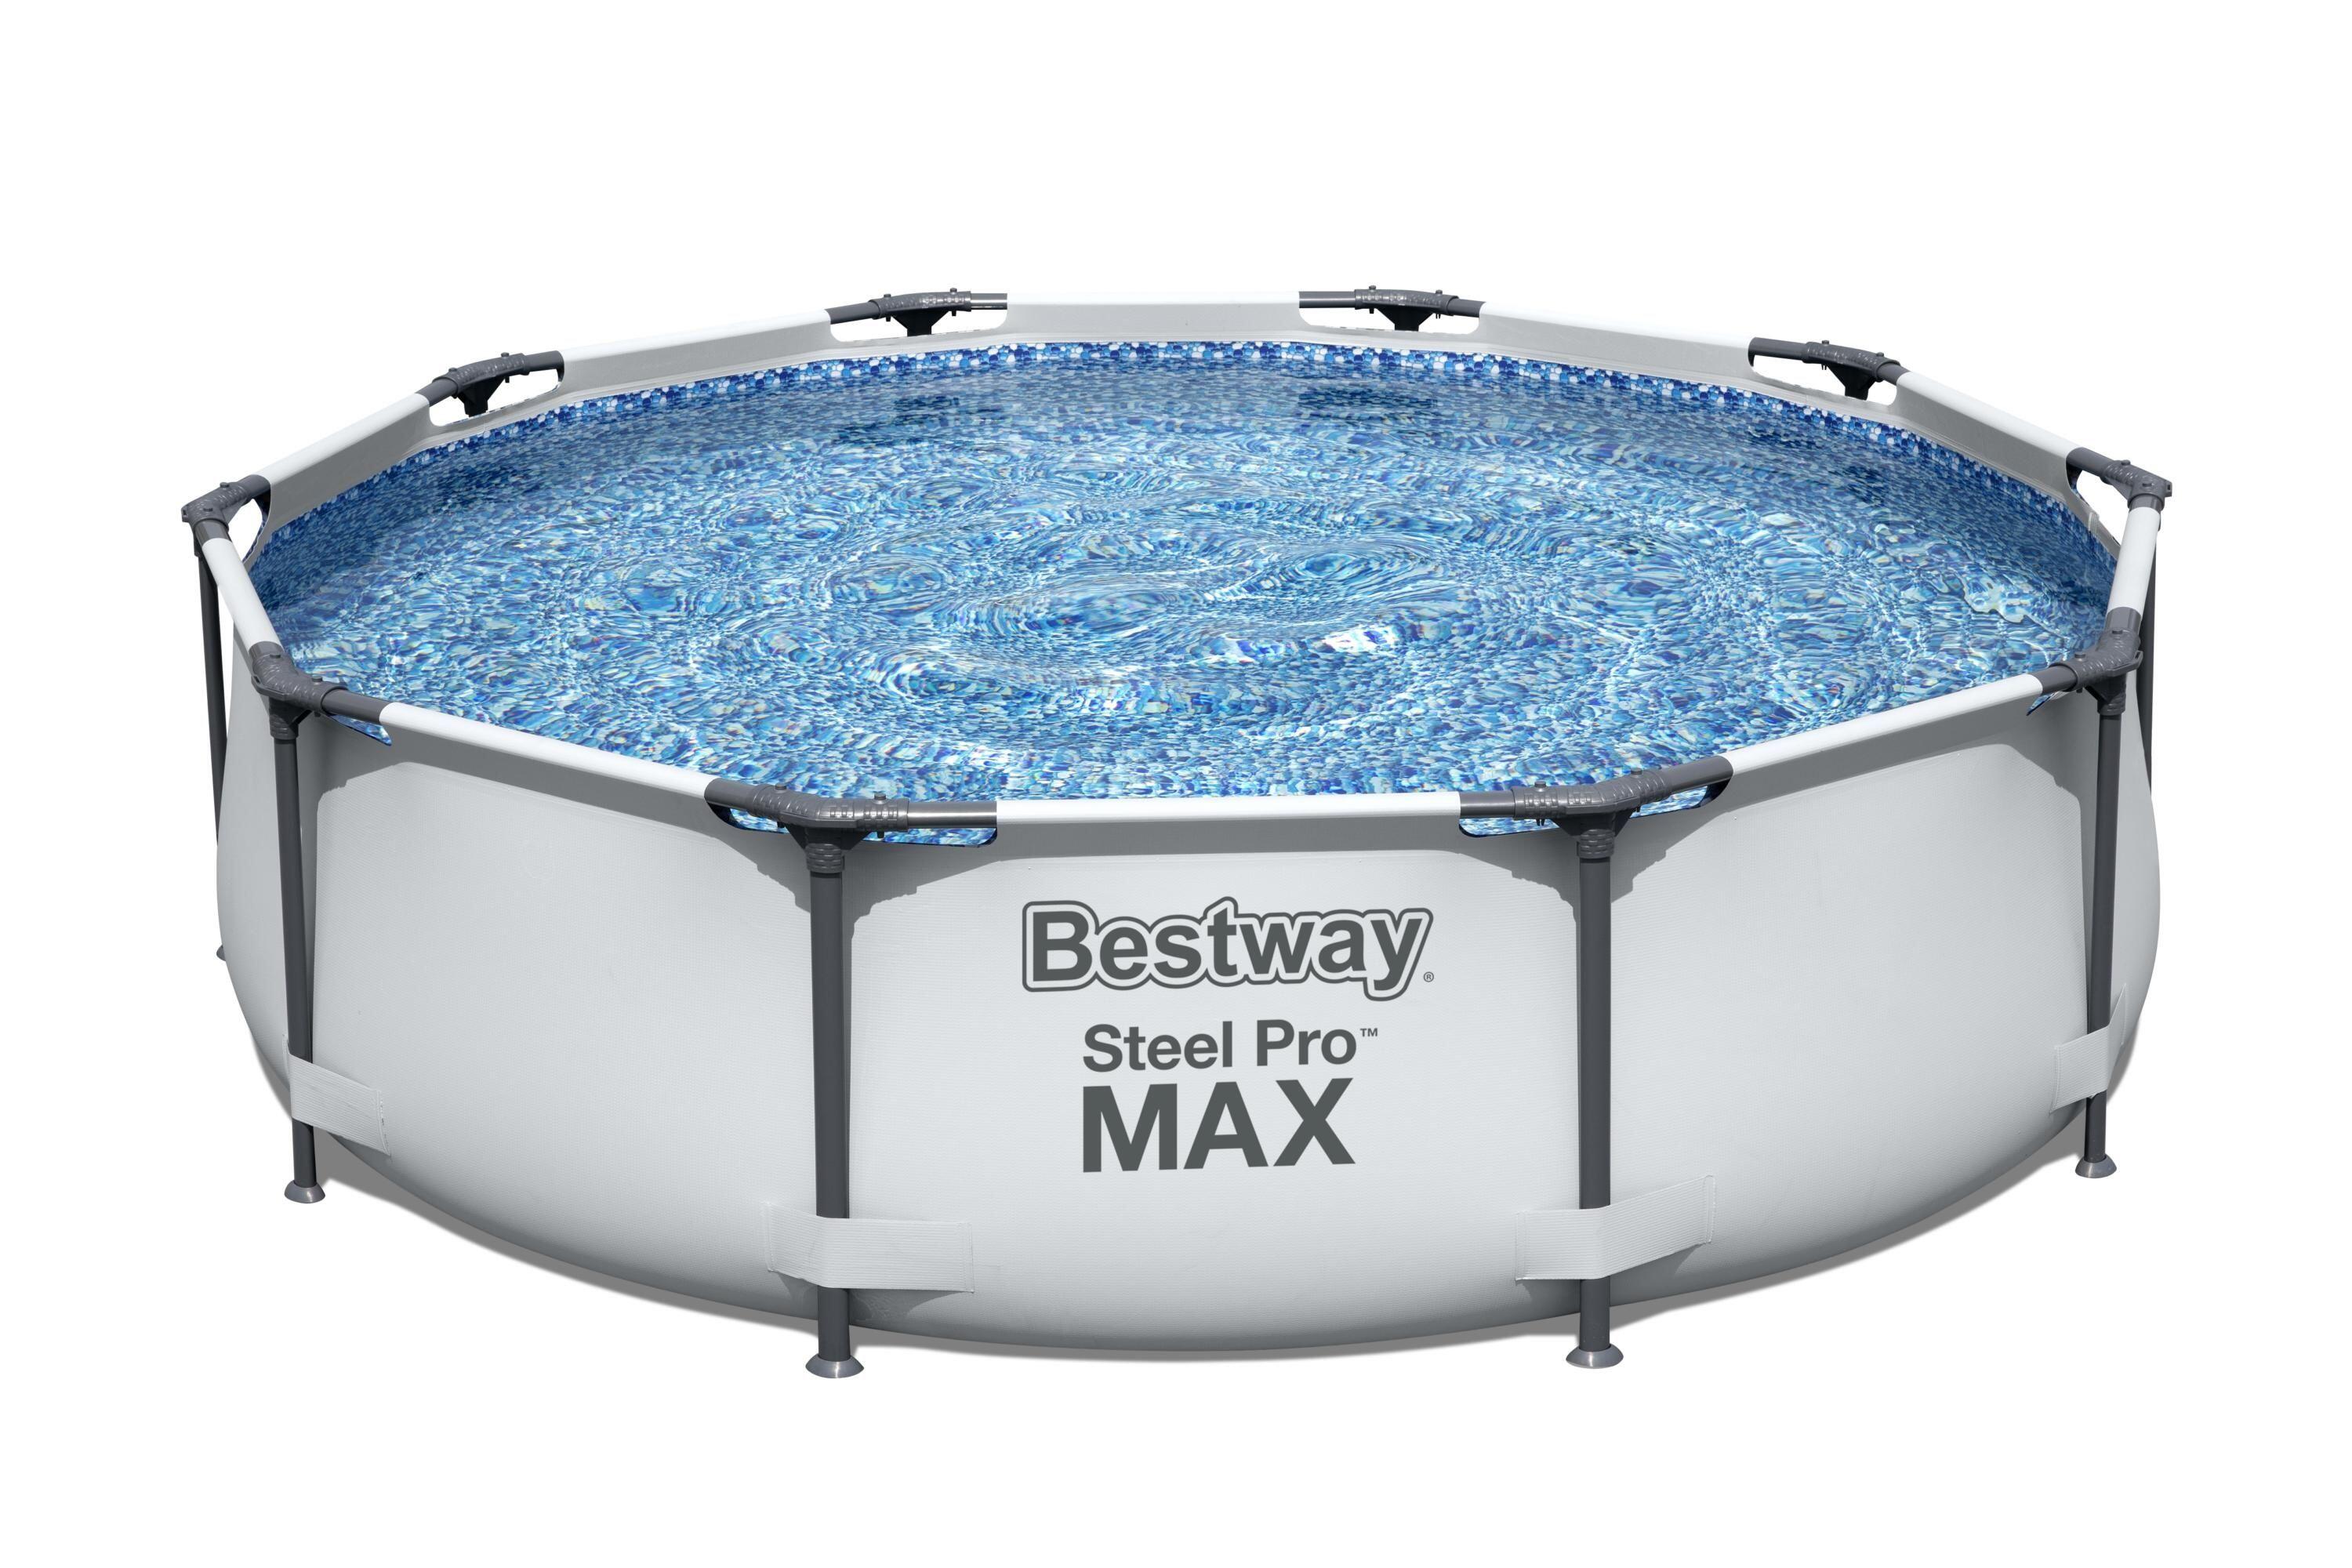 BESTWAY Bestway Steel Pro MAX Framed Above Ground Swimming Pool, 10ft x 30" - Grey